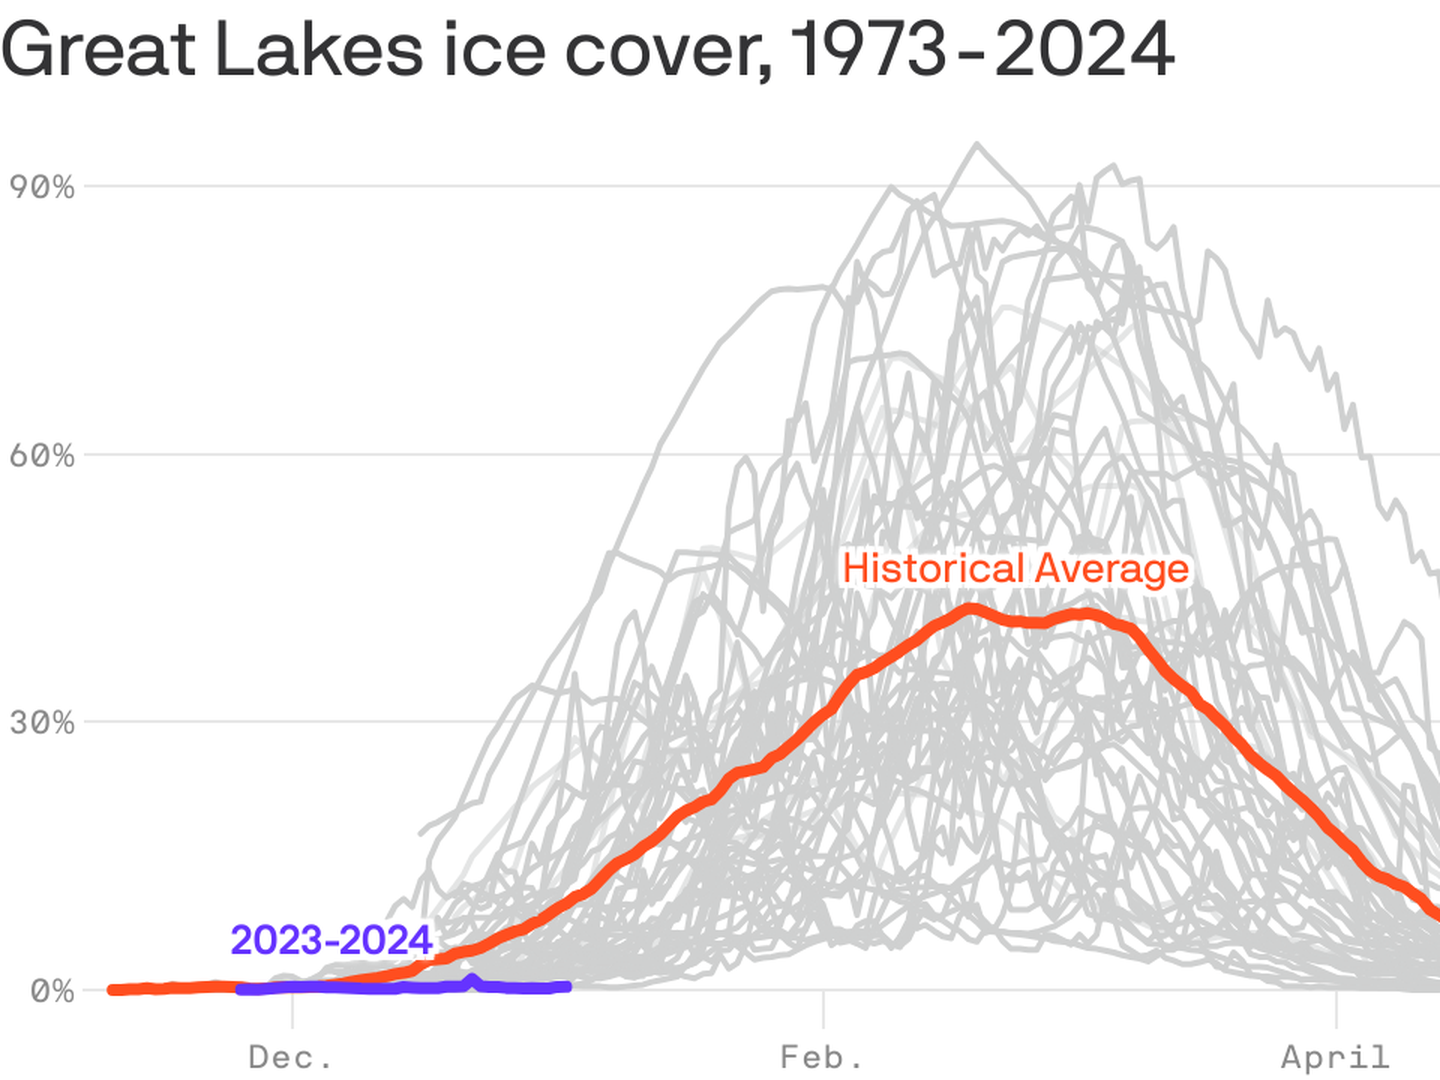 Anticipating the 2023-2024 ice season